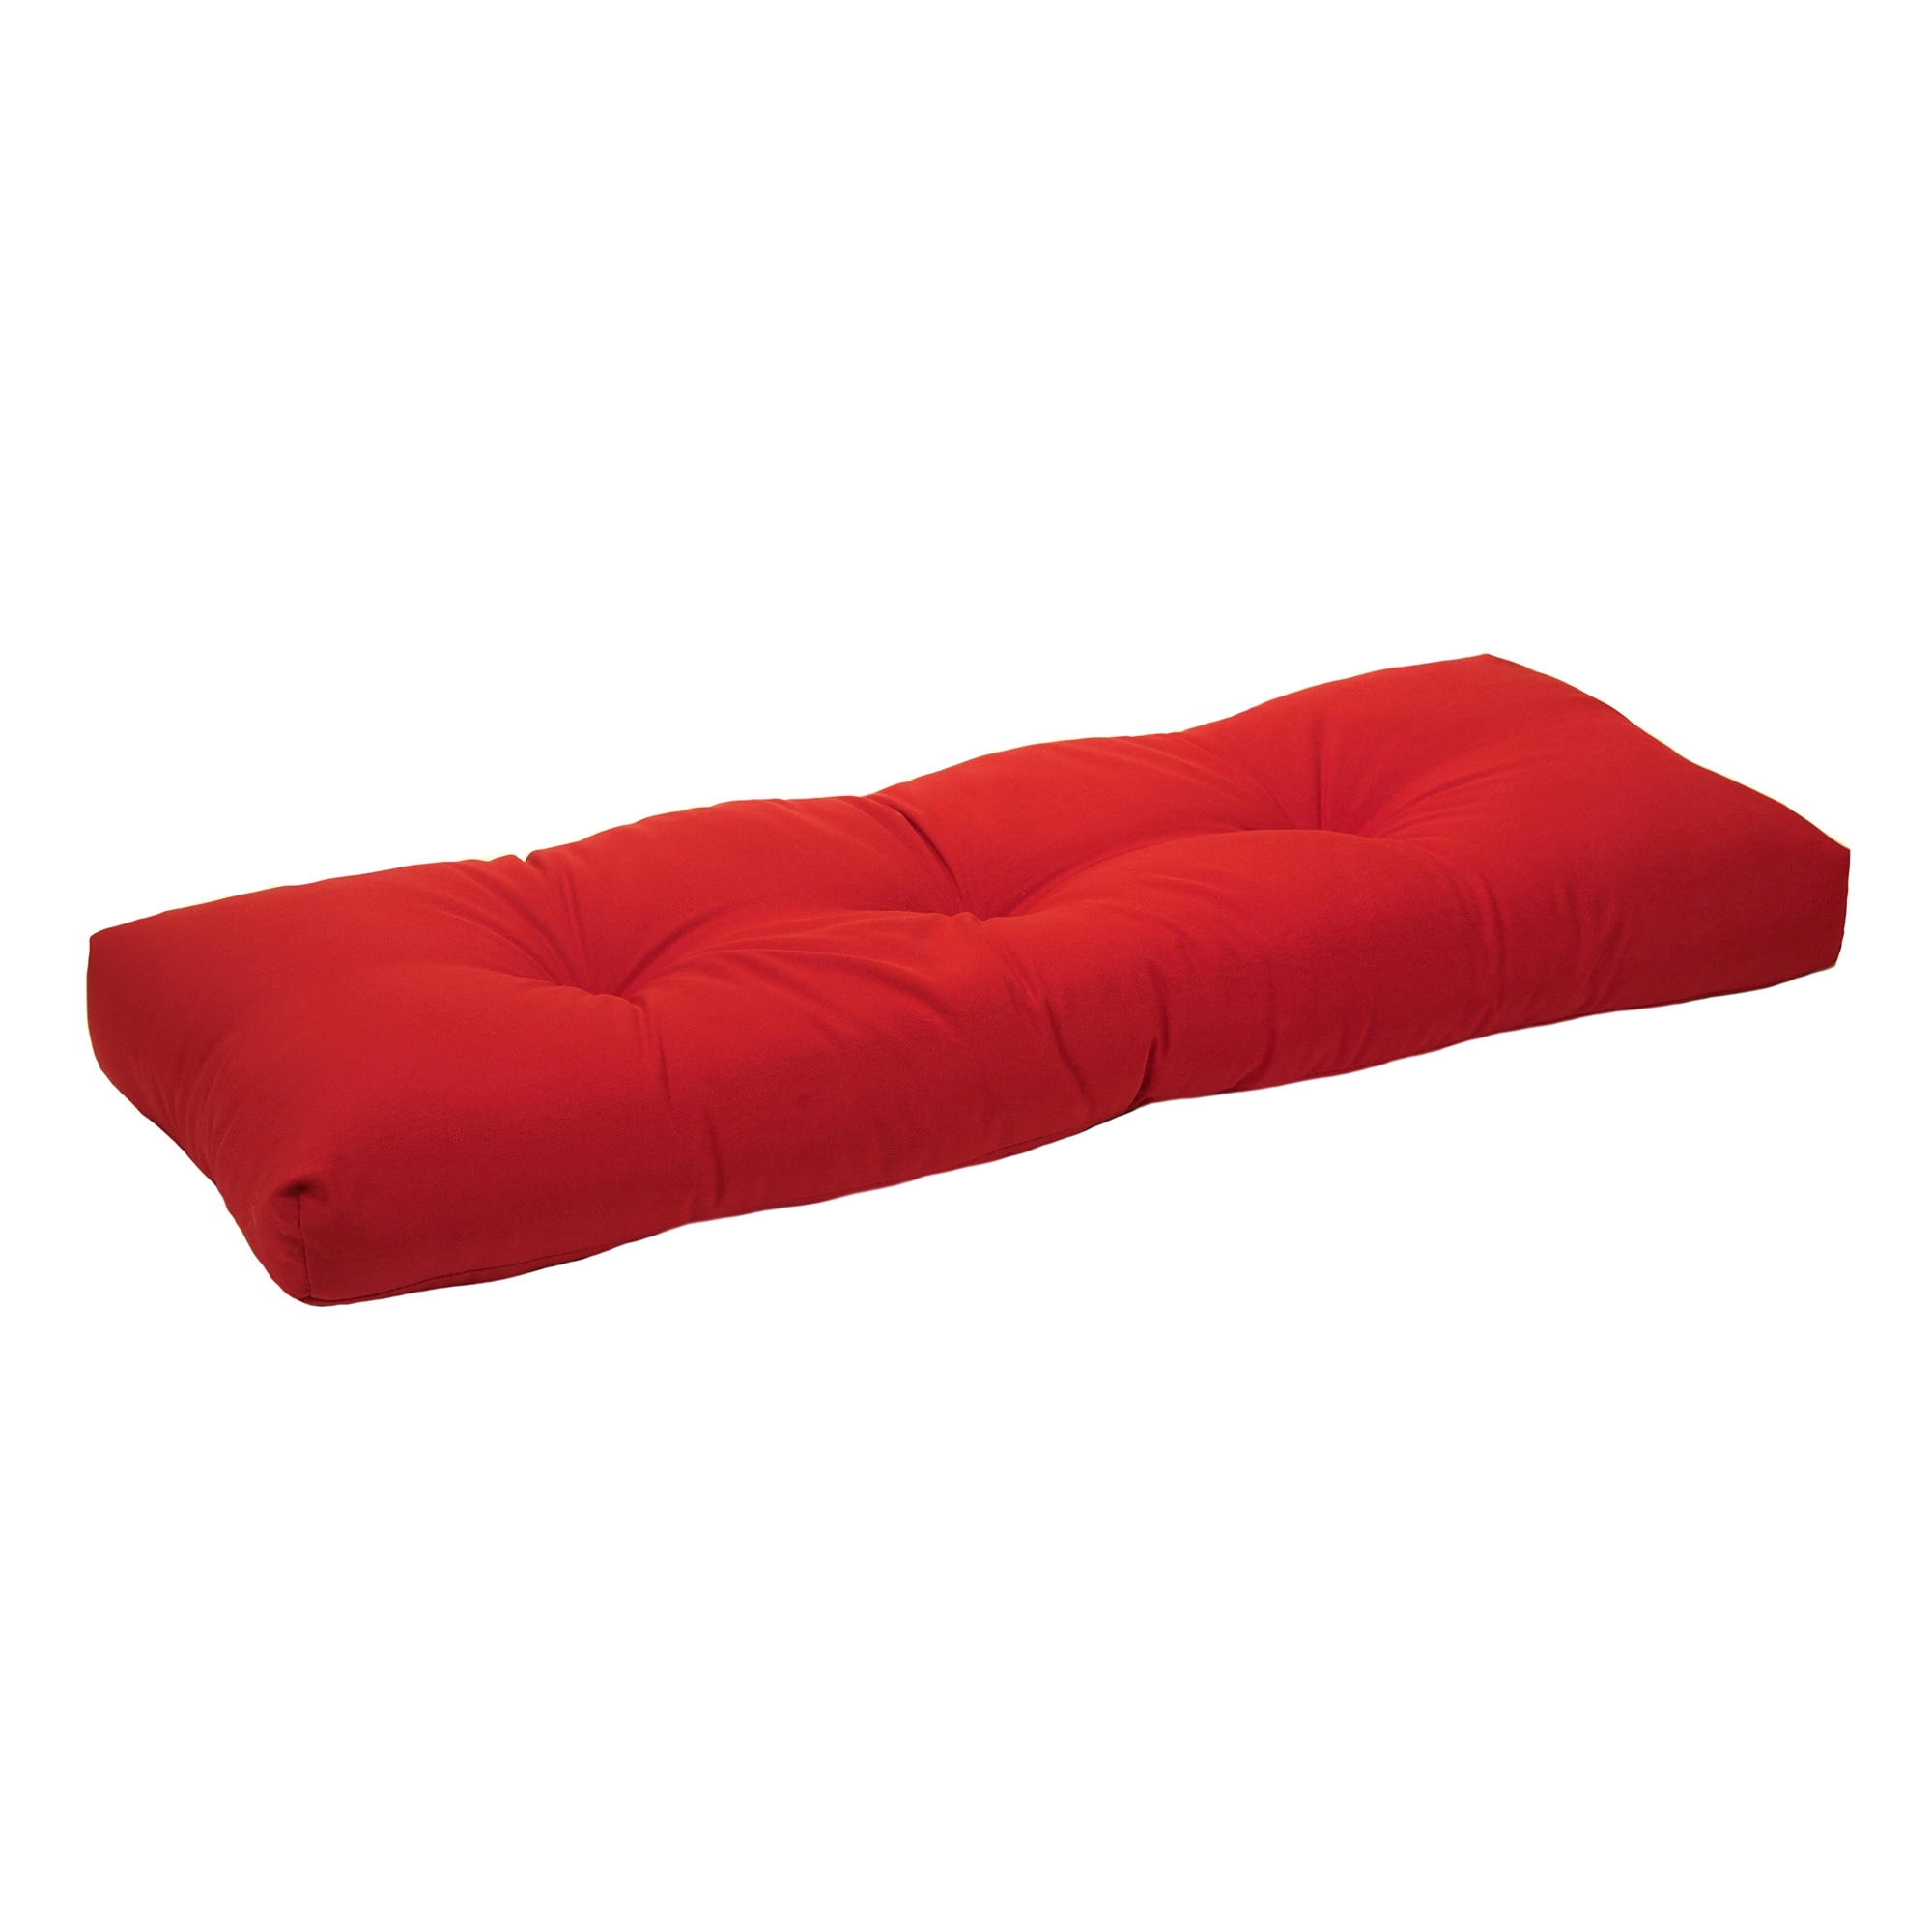 Patio Outdoor Indoor Red Bench Cushion 43 X 19 X 3 Overstock 31602231